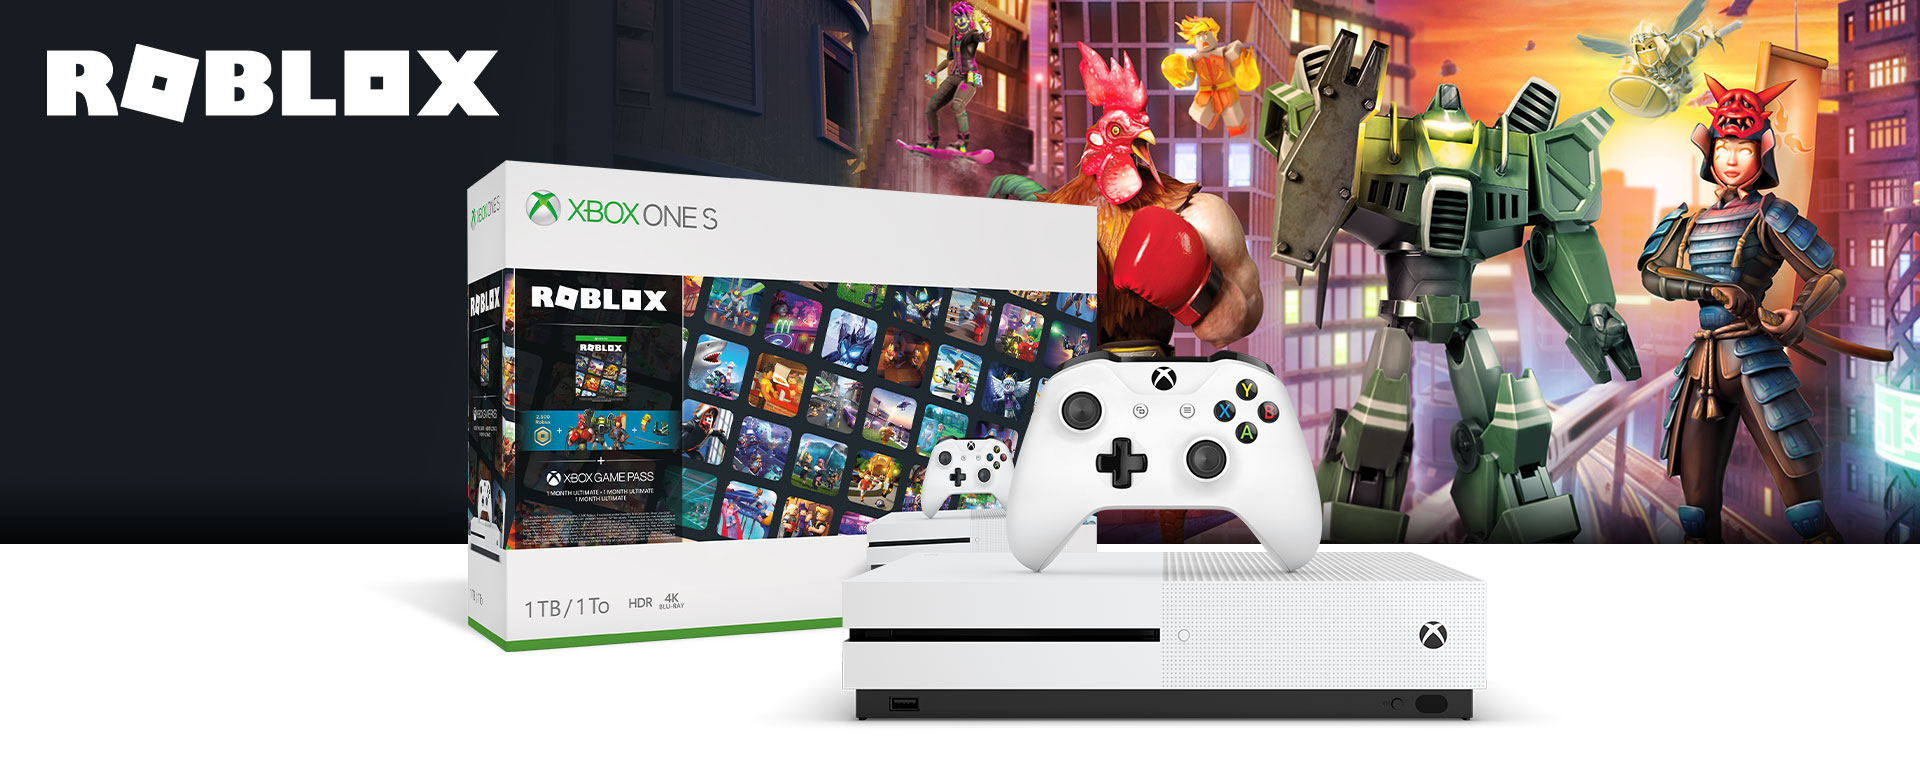 Roblox Xbox One Server Status